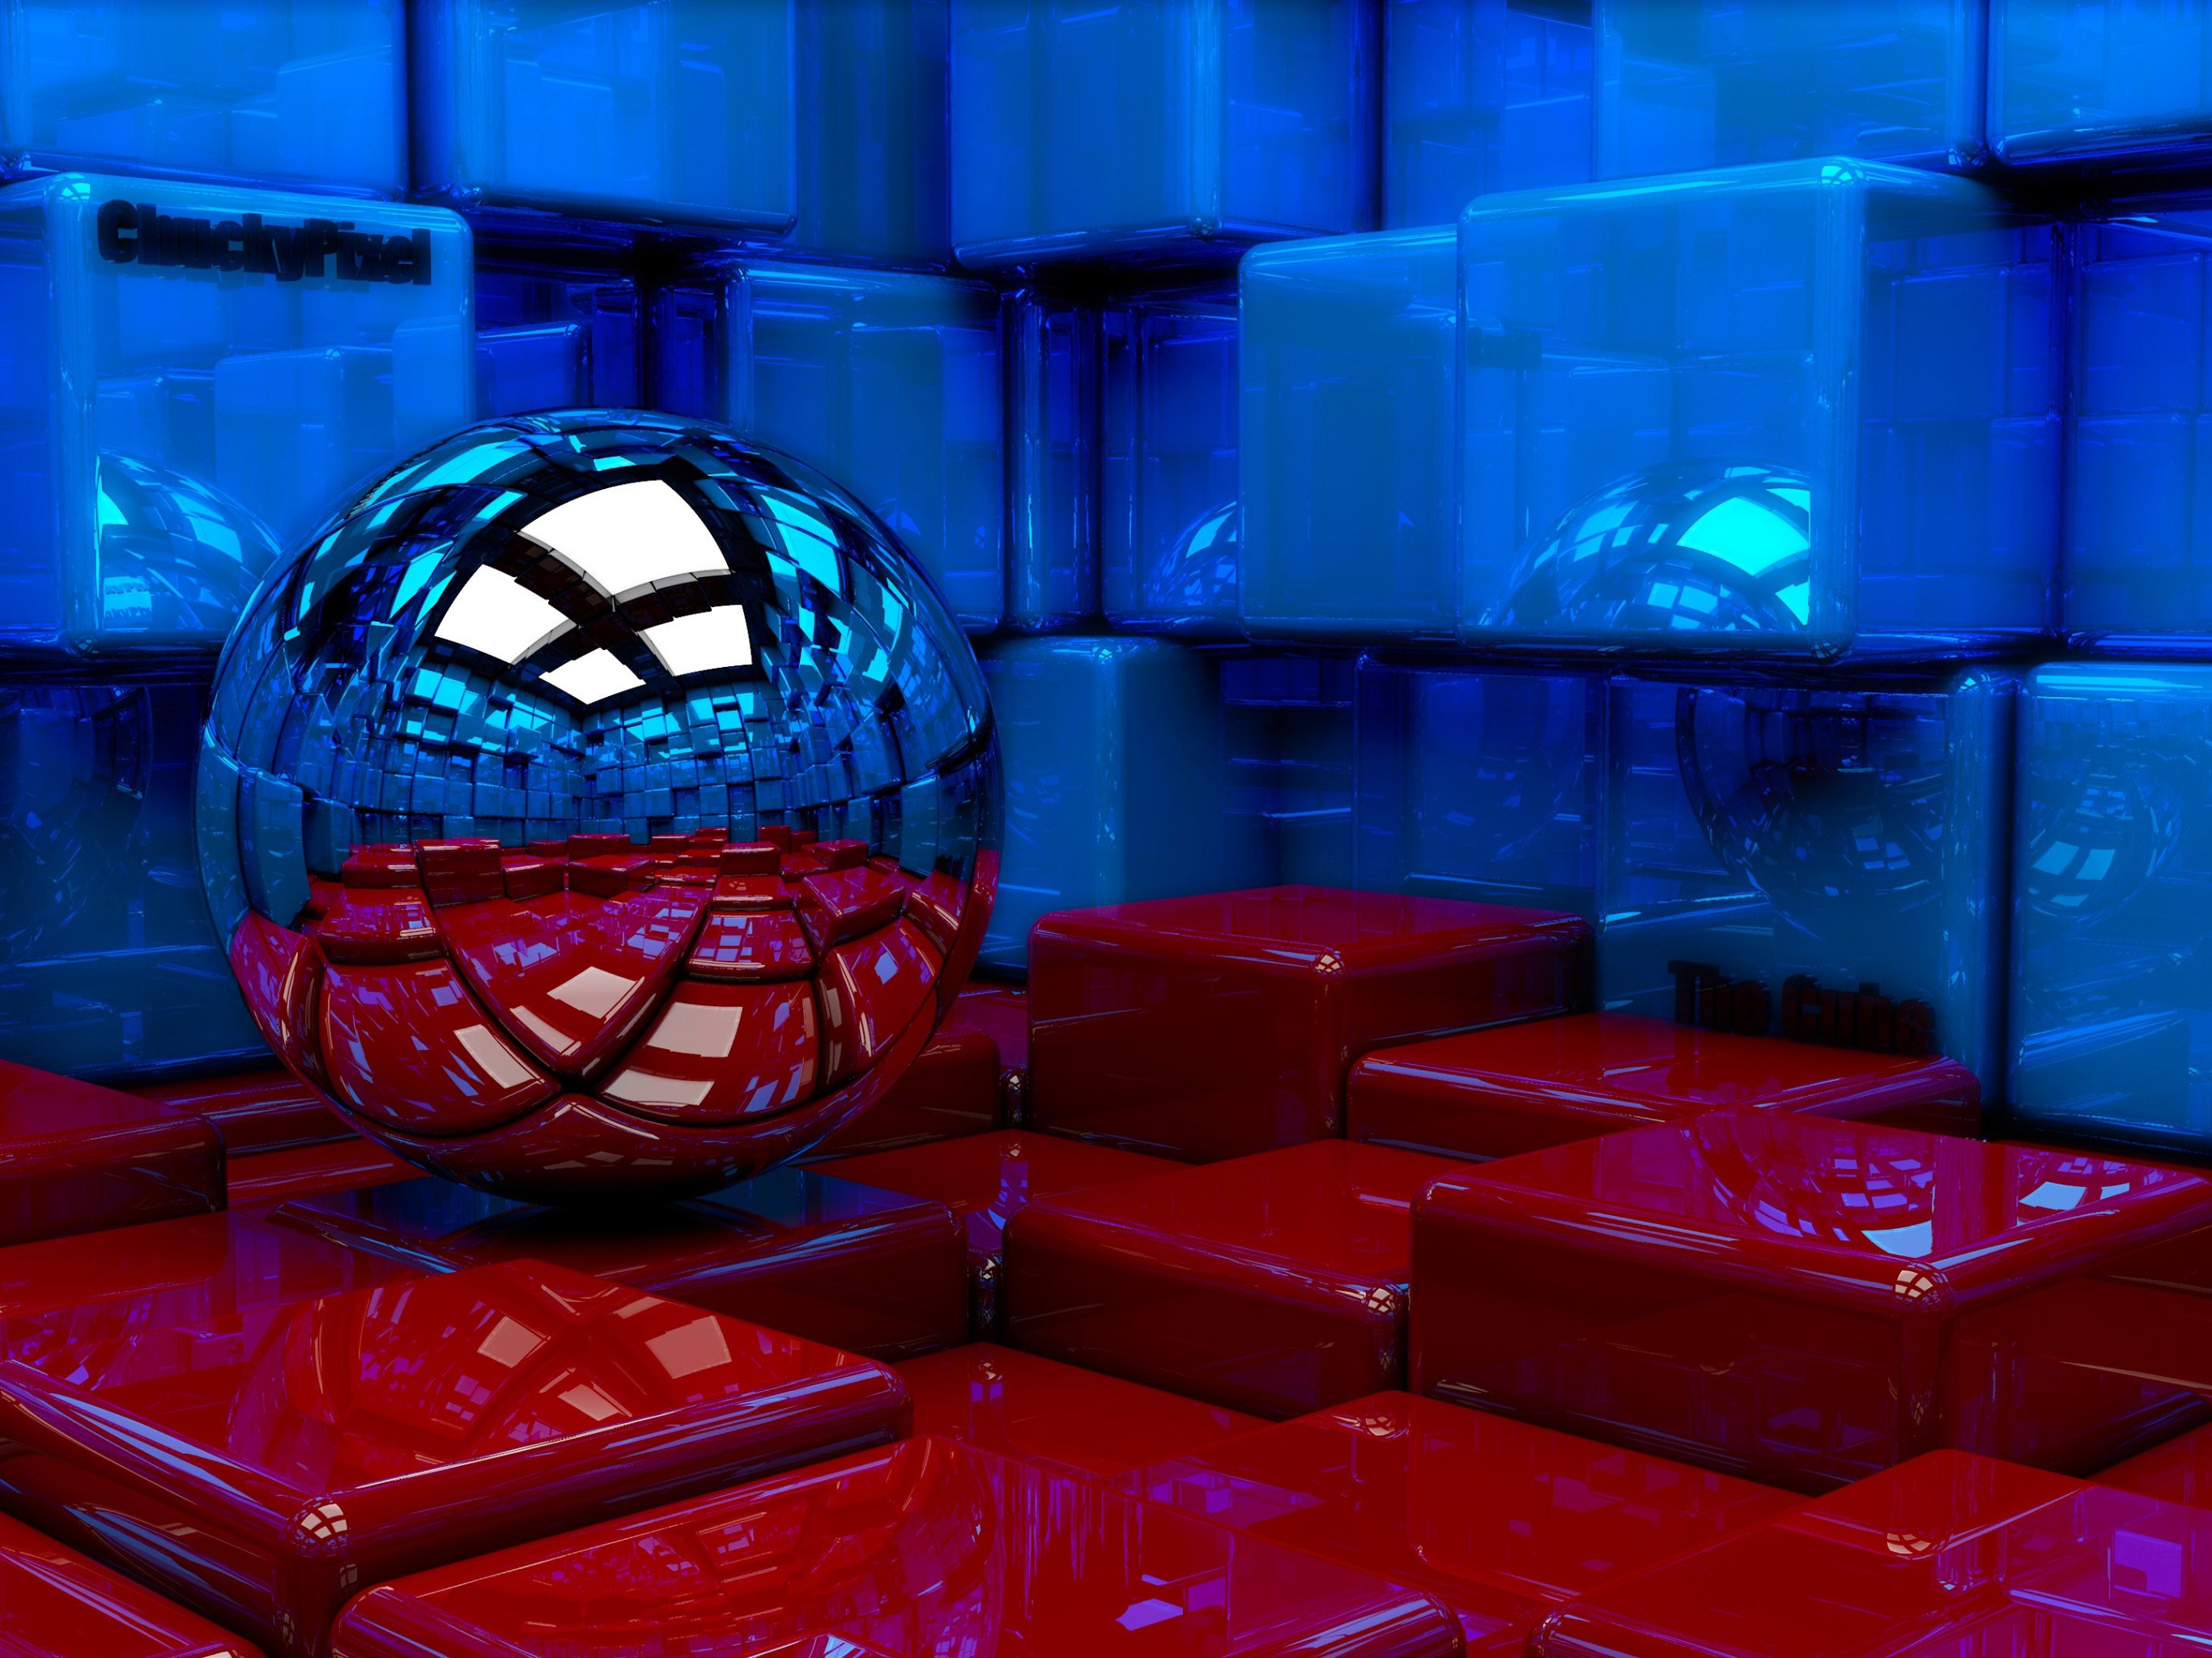 2732 x 2048 wallpaper,blue,red,light,sphere,ball